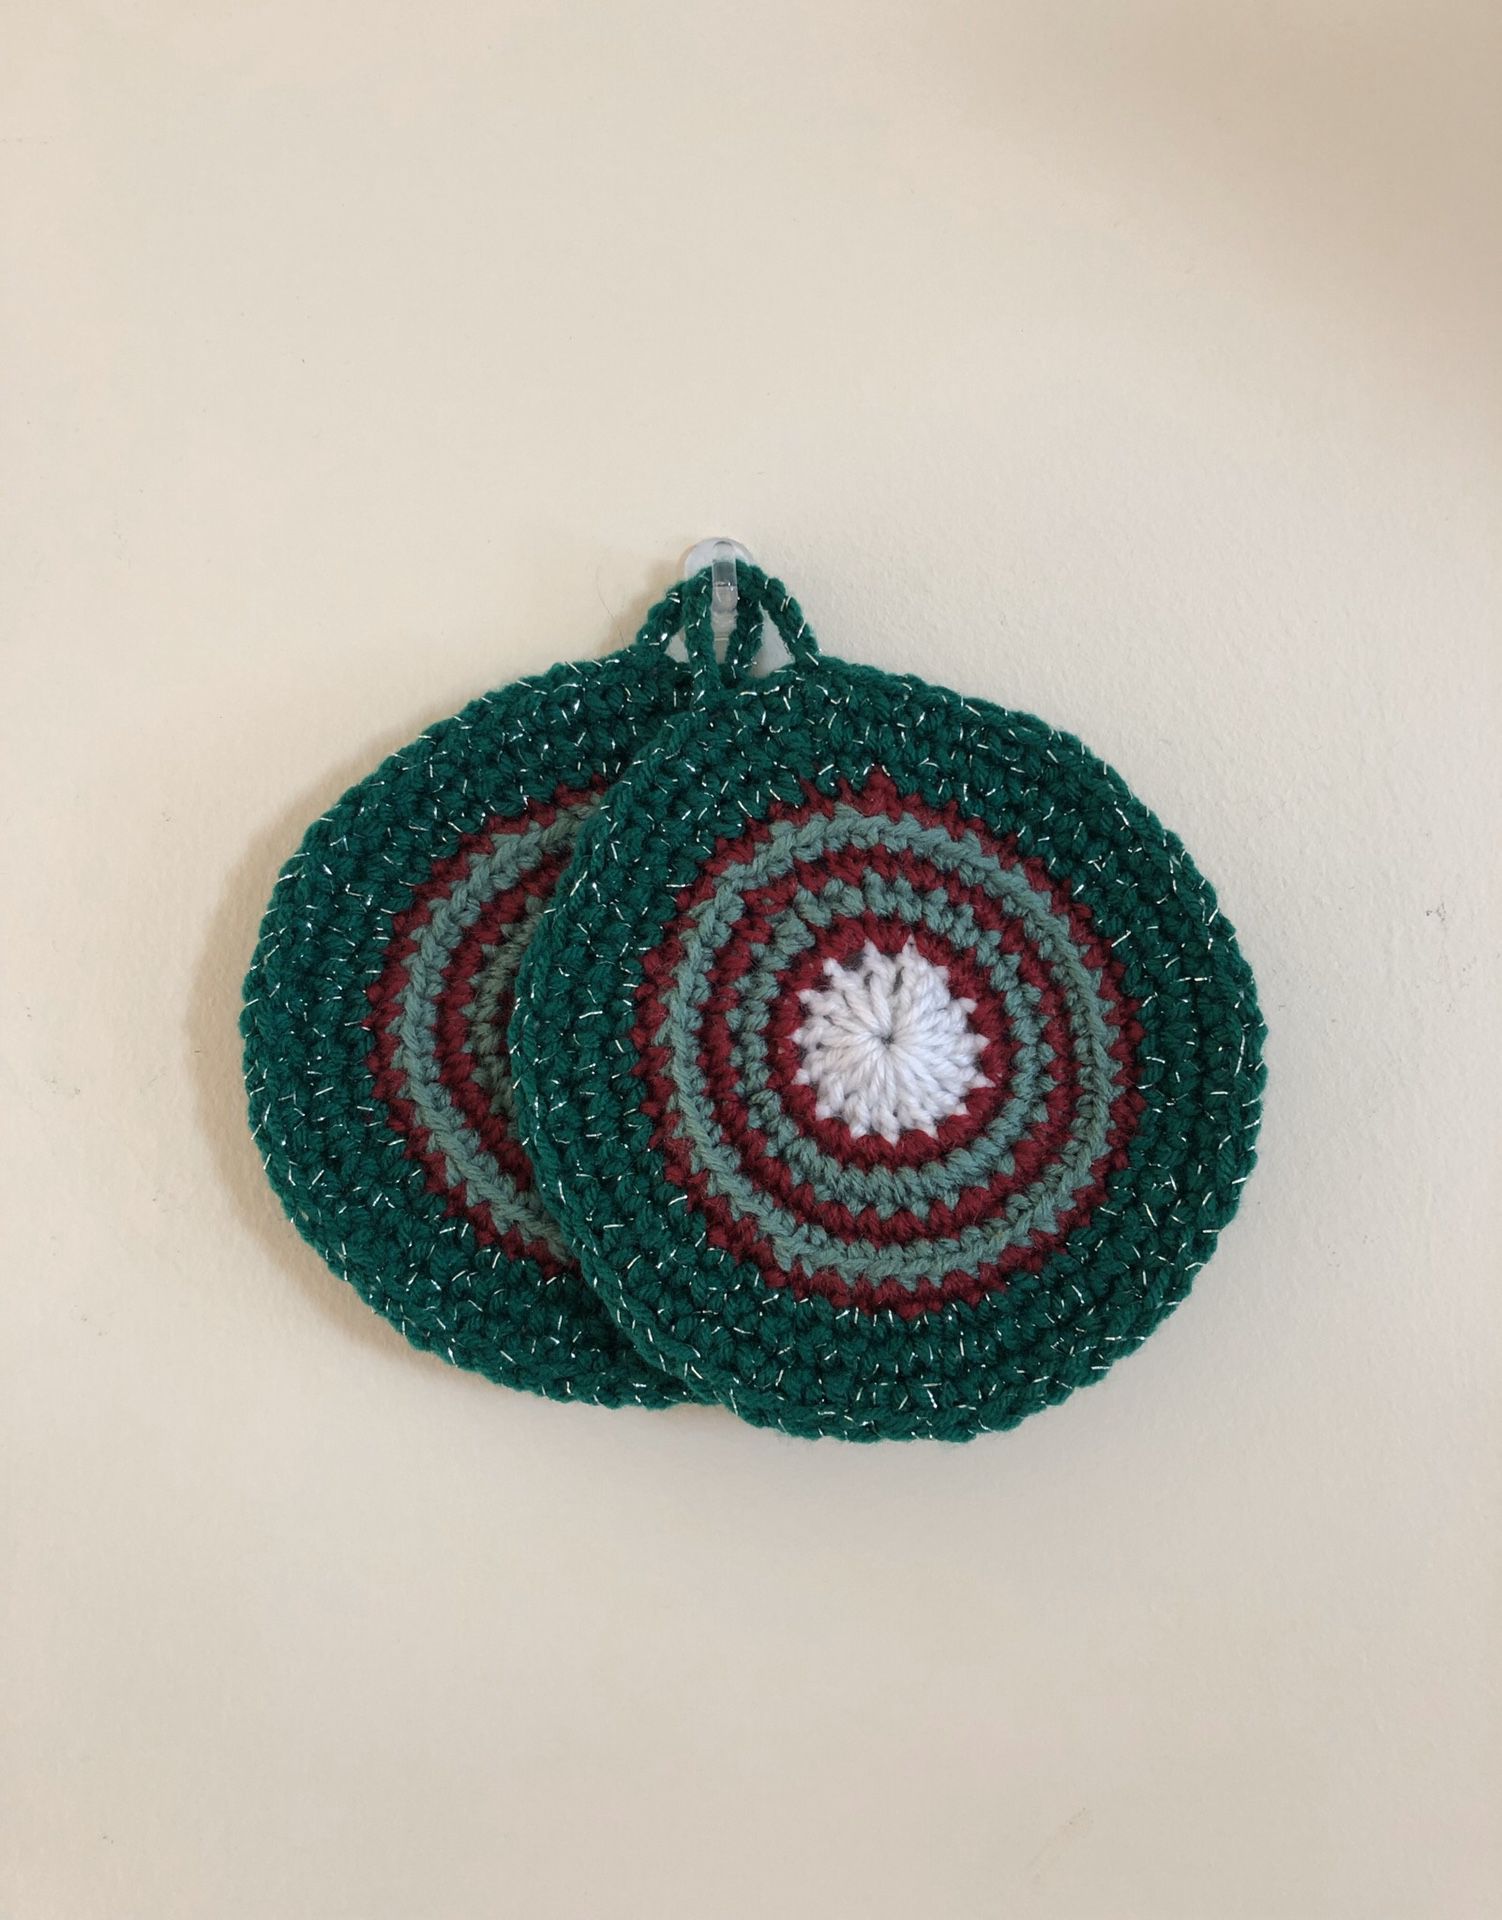 Unique crochet pot holders for Gift